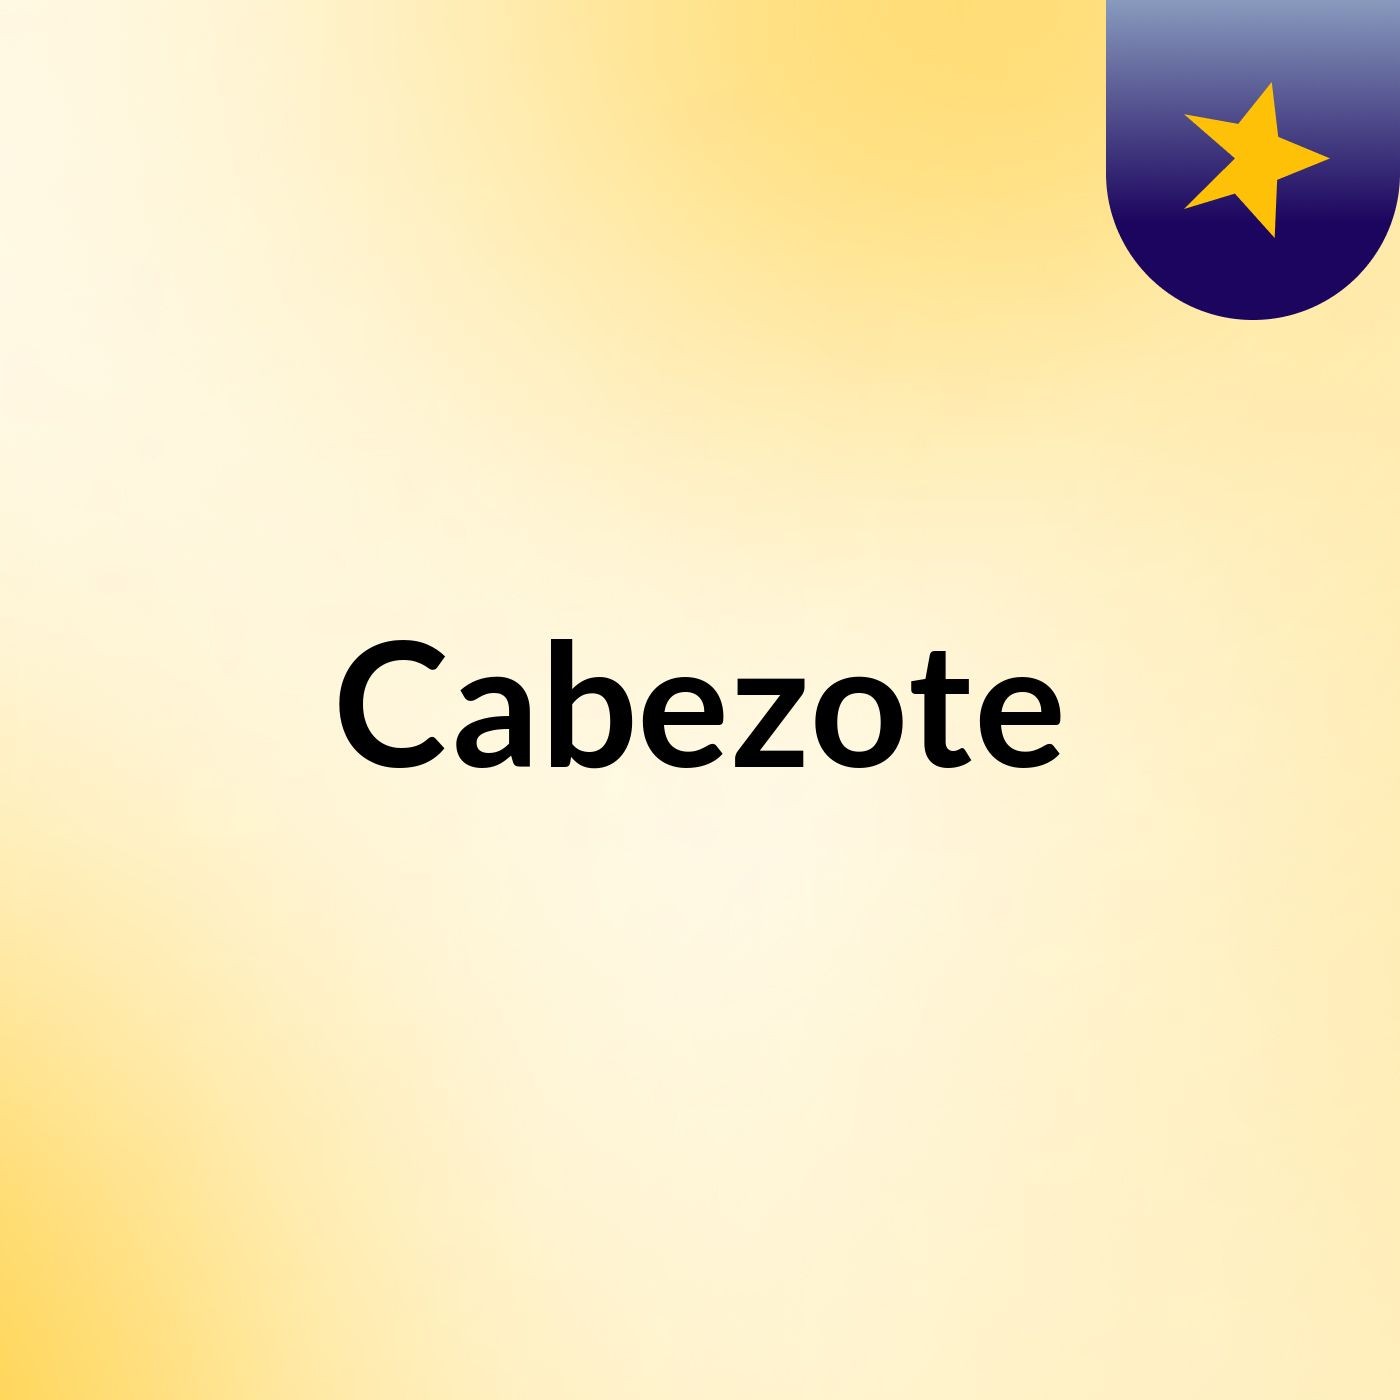 Cabezote